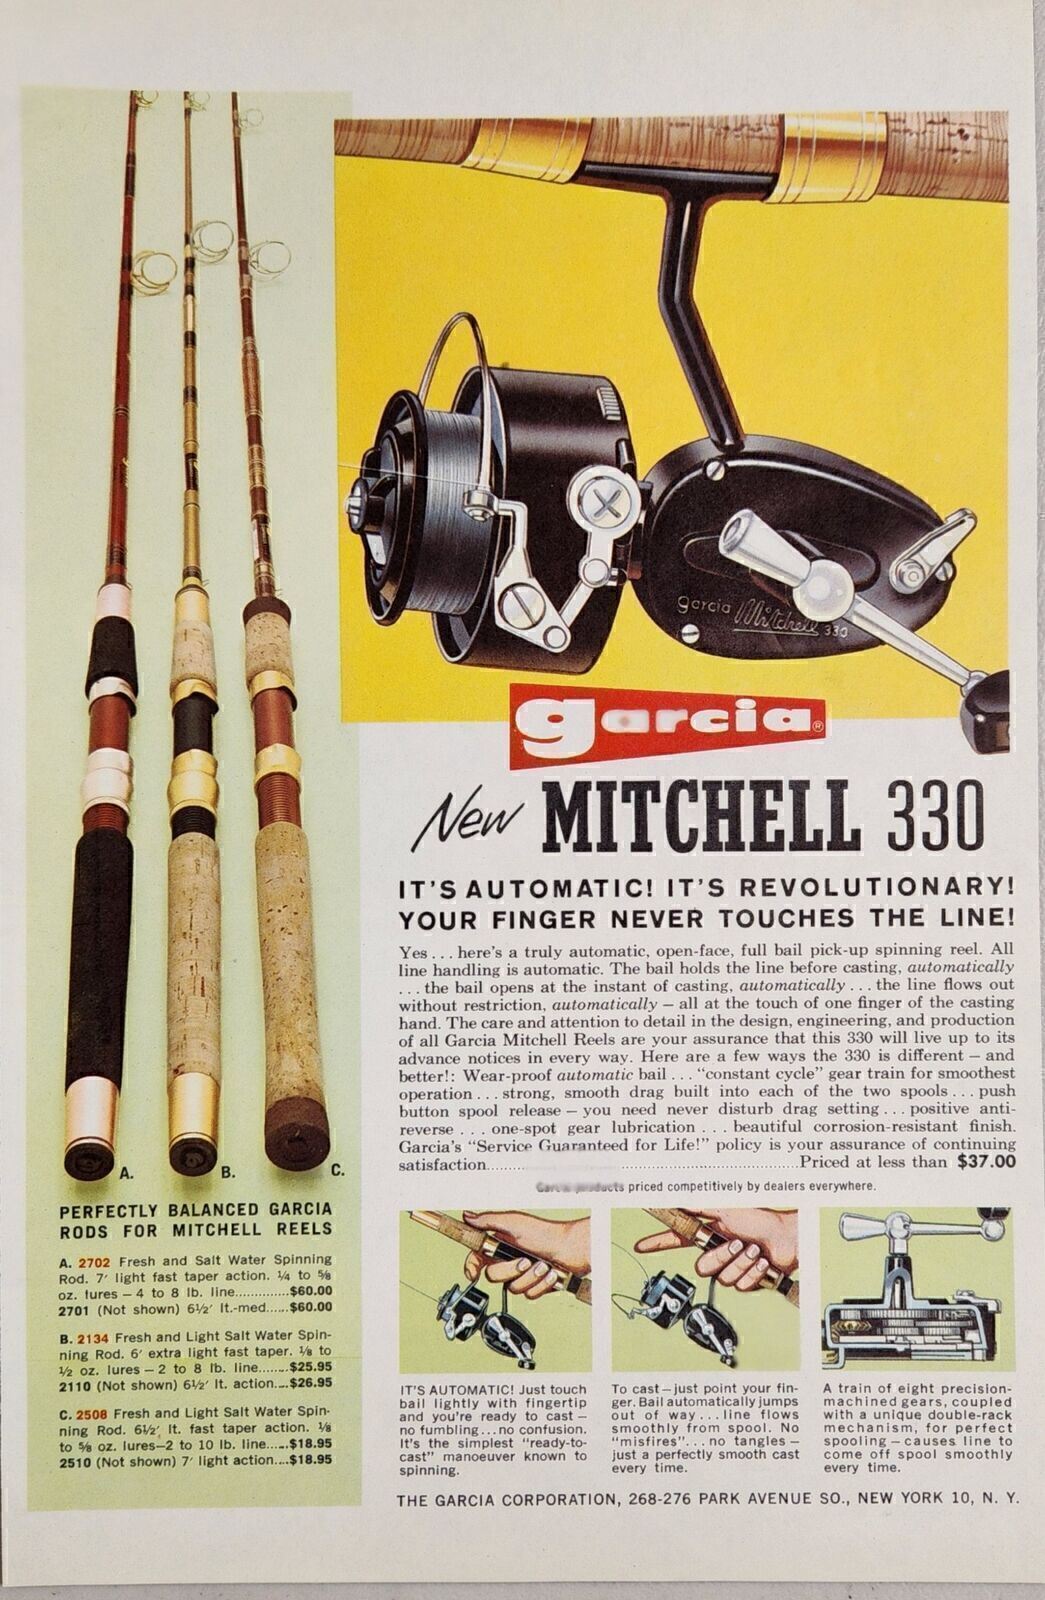 1962 Print Ad Garcia Mitchell 330 Fishing Reels & Balanced Rods New York,NY